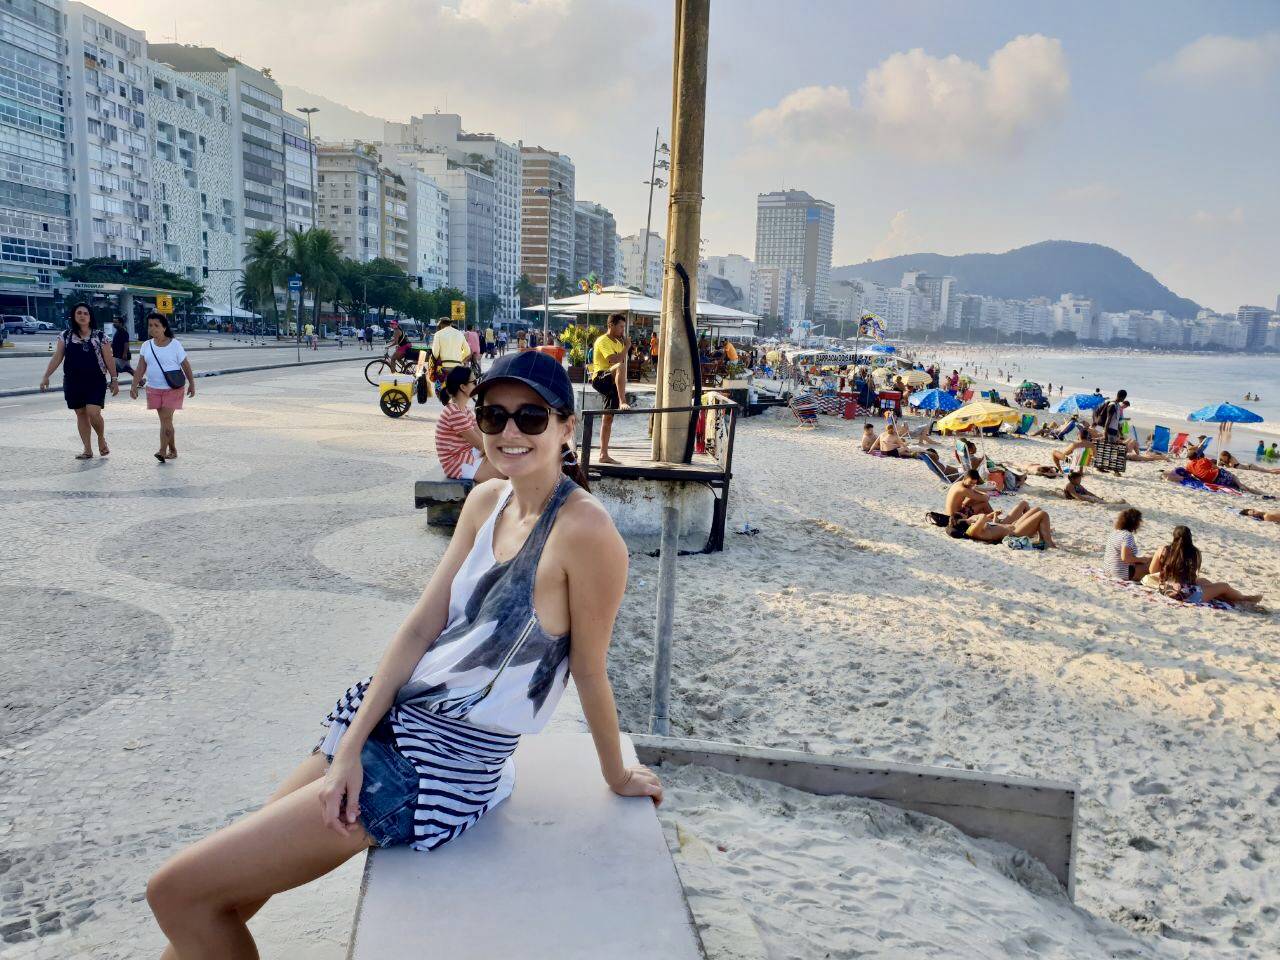 Things to do in Rio de Janeiro - famous beaches